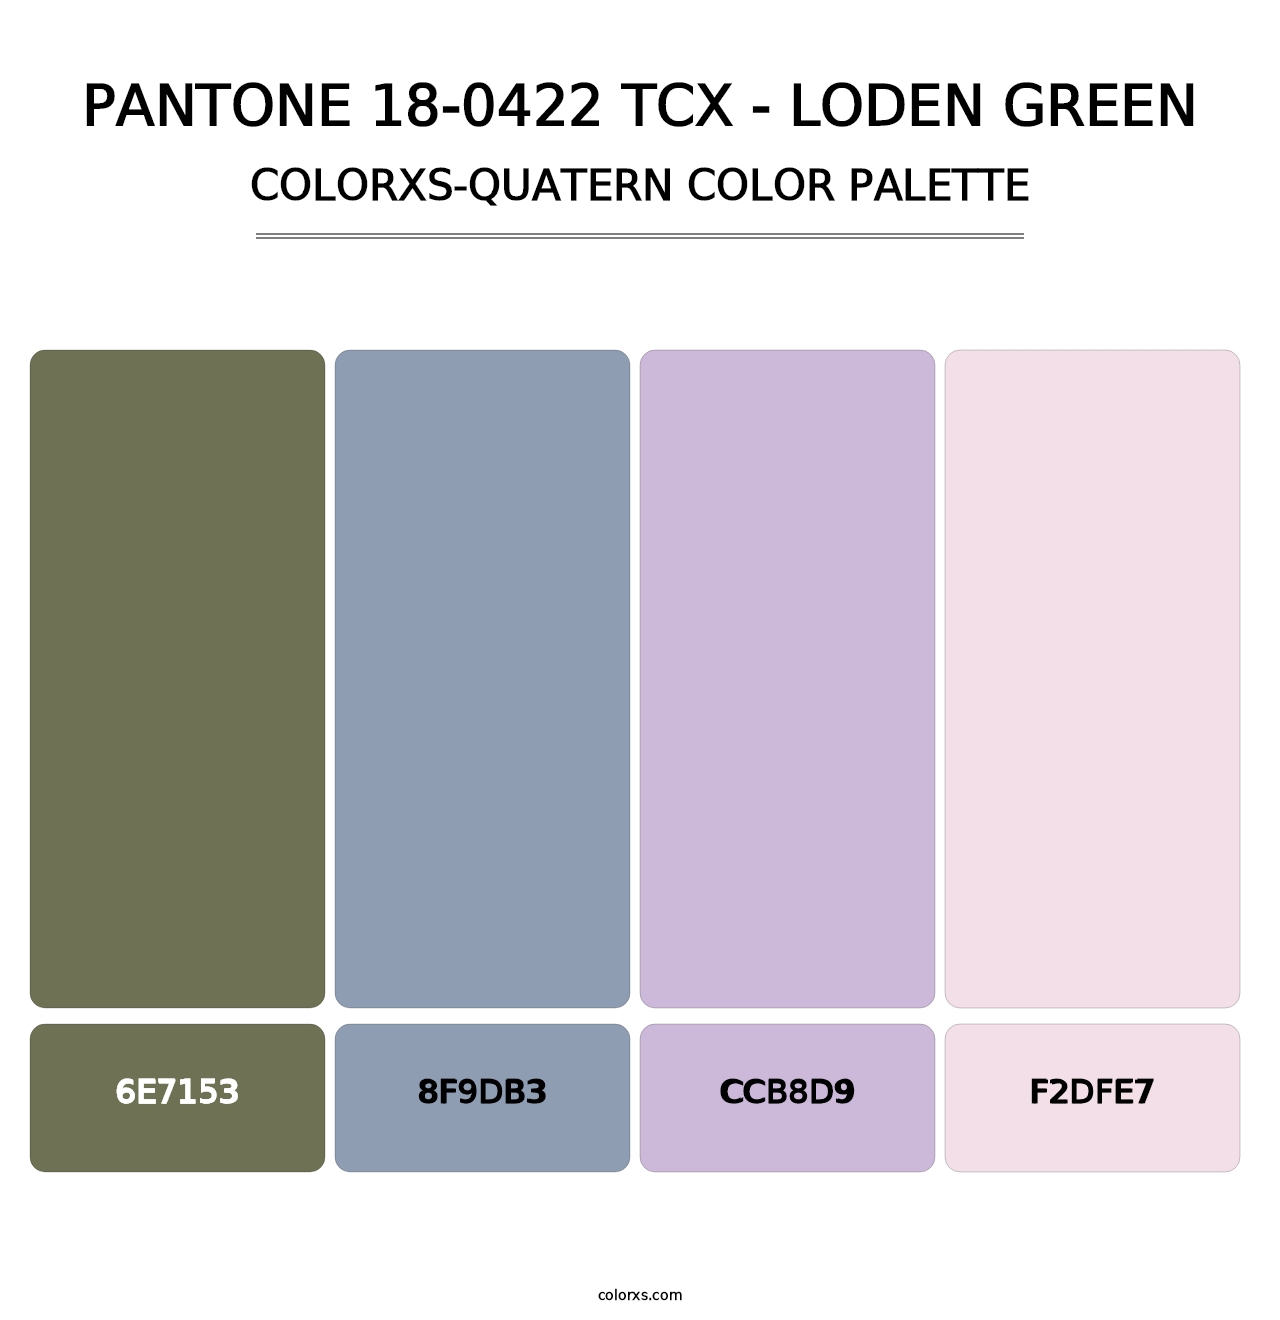 PANTONE 18-0422 TCX - Loden Green - Colorxs Quatern Palette